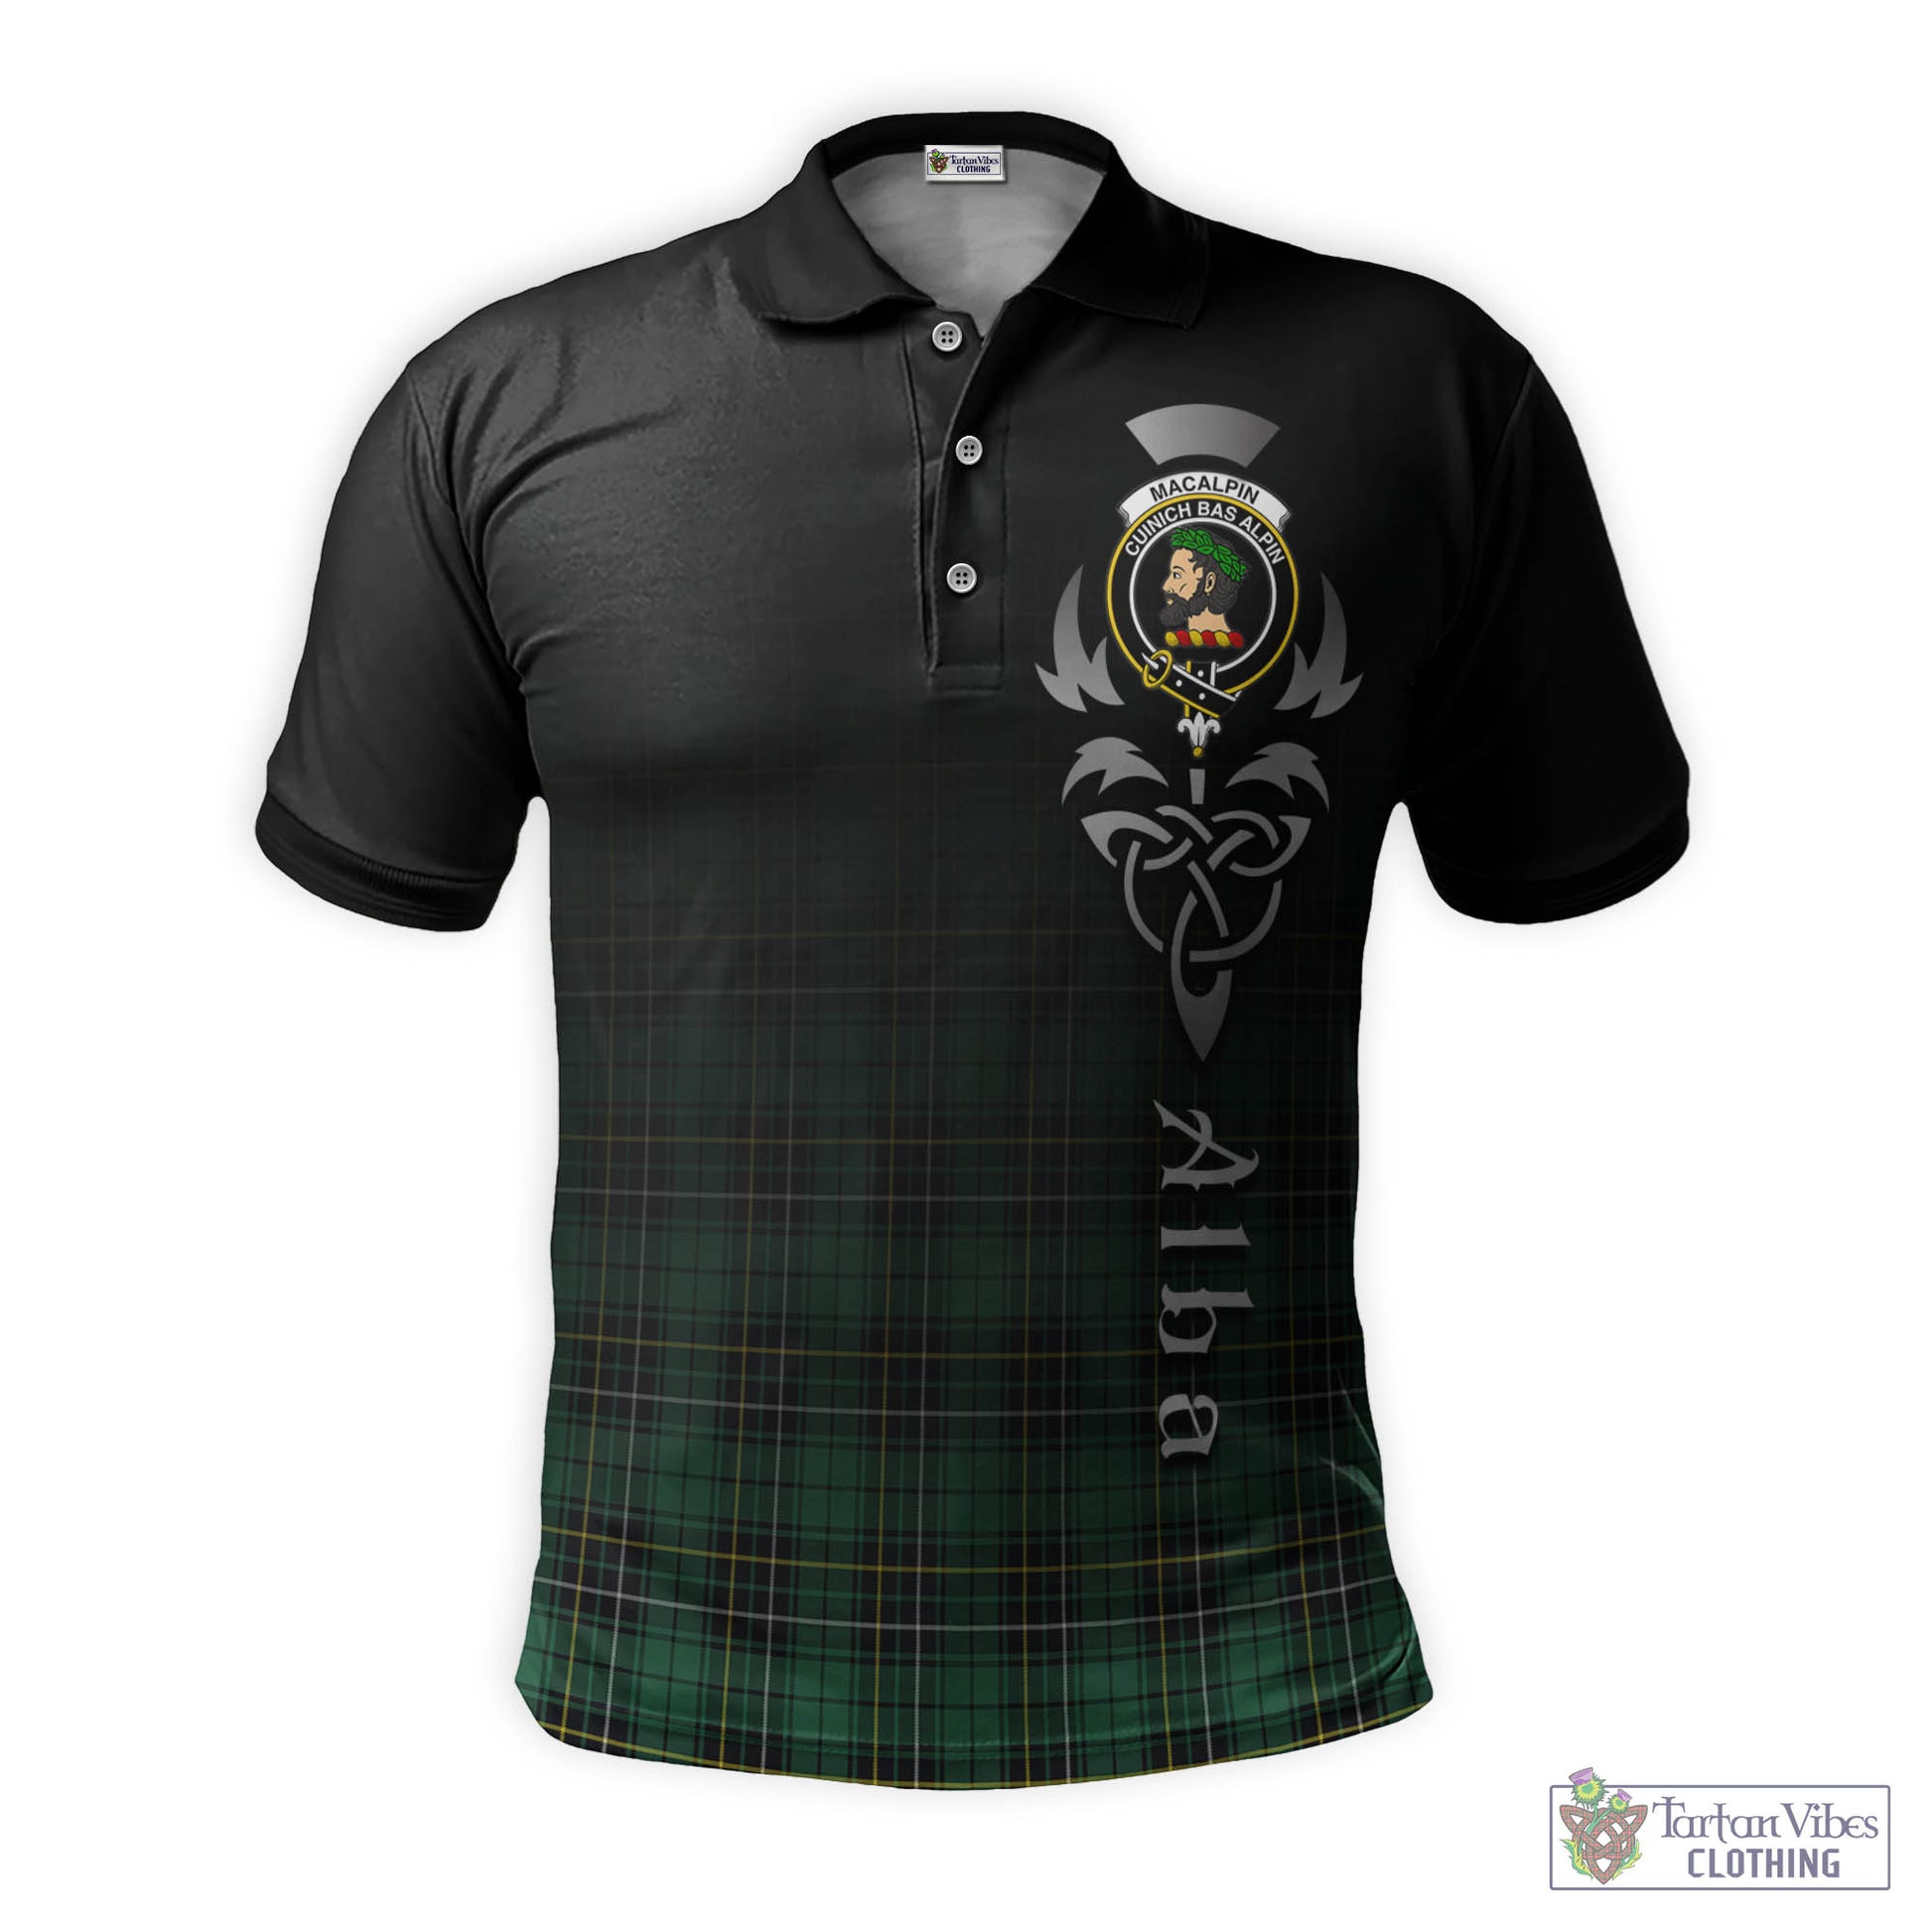 Tartan Vibes Clothing MacAlpin Ancient Tartan Polo Shirt Featuring Alba Gu Brath Family Crest Celtic Inspired